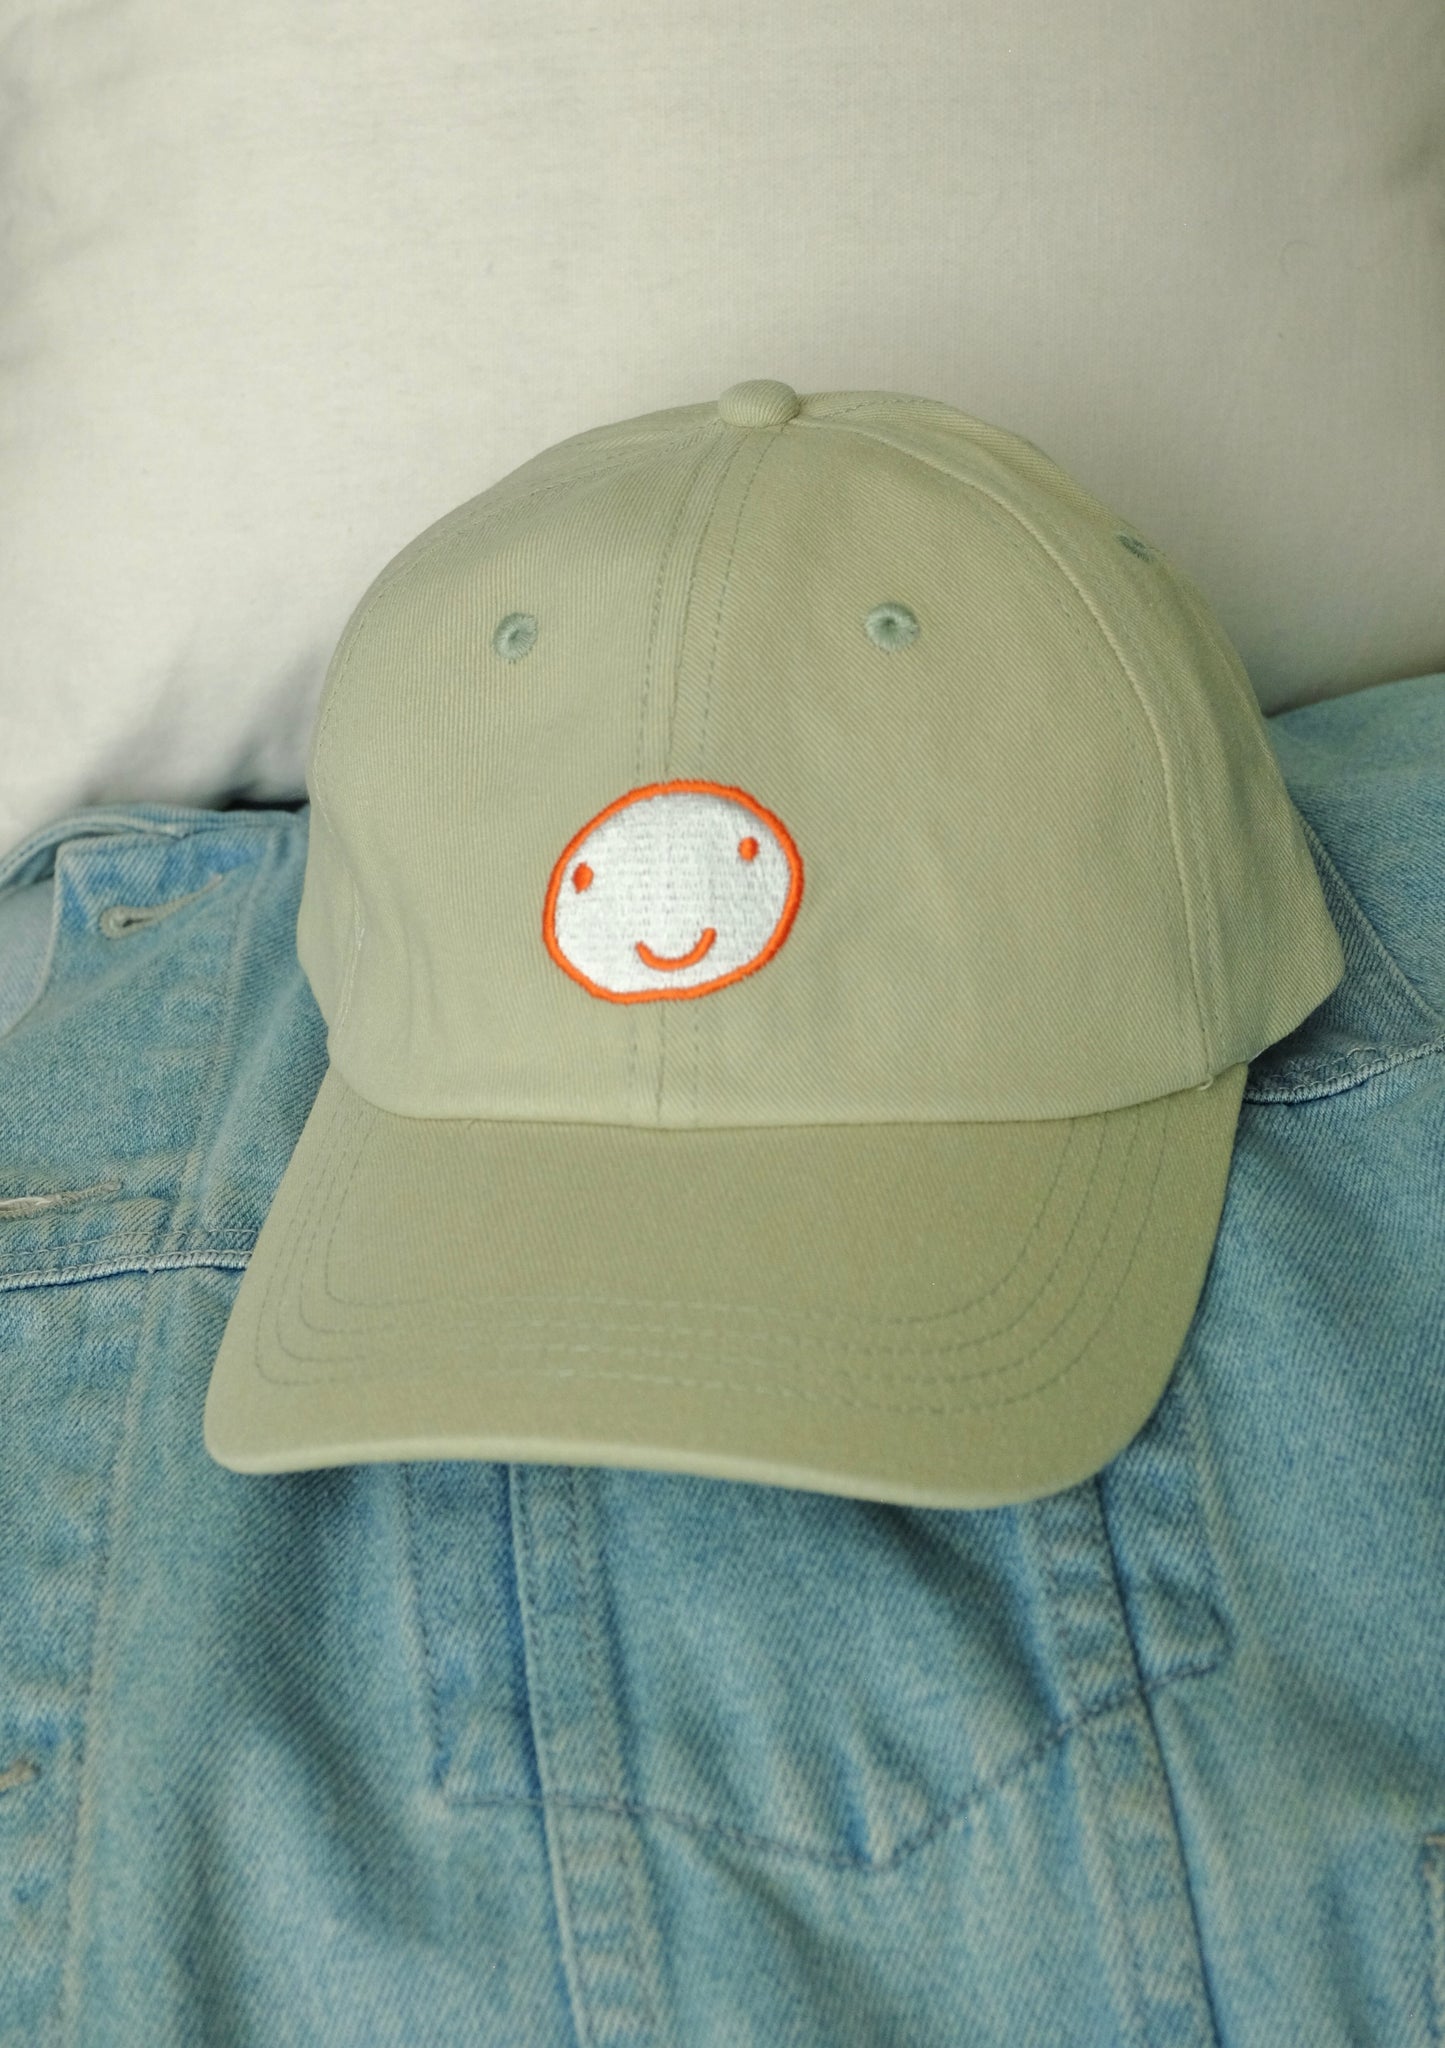 Happy Hat- The Dad Hat